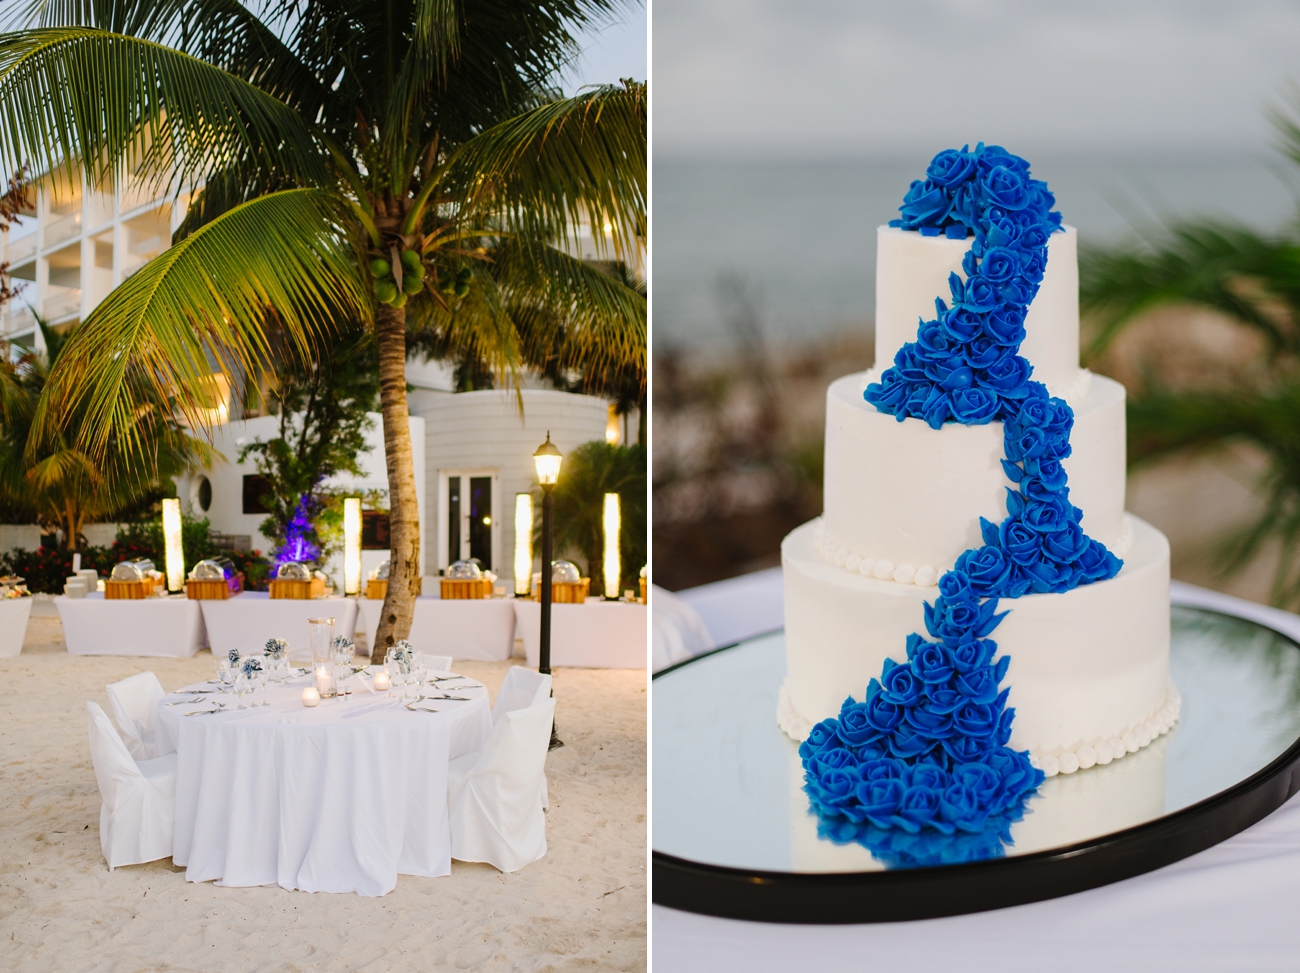 Montego Bay Jamaica Wedding Pictures at the Secrets Resort | Natalie Franke Photography 